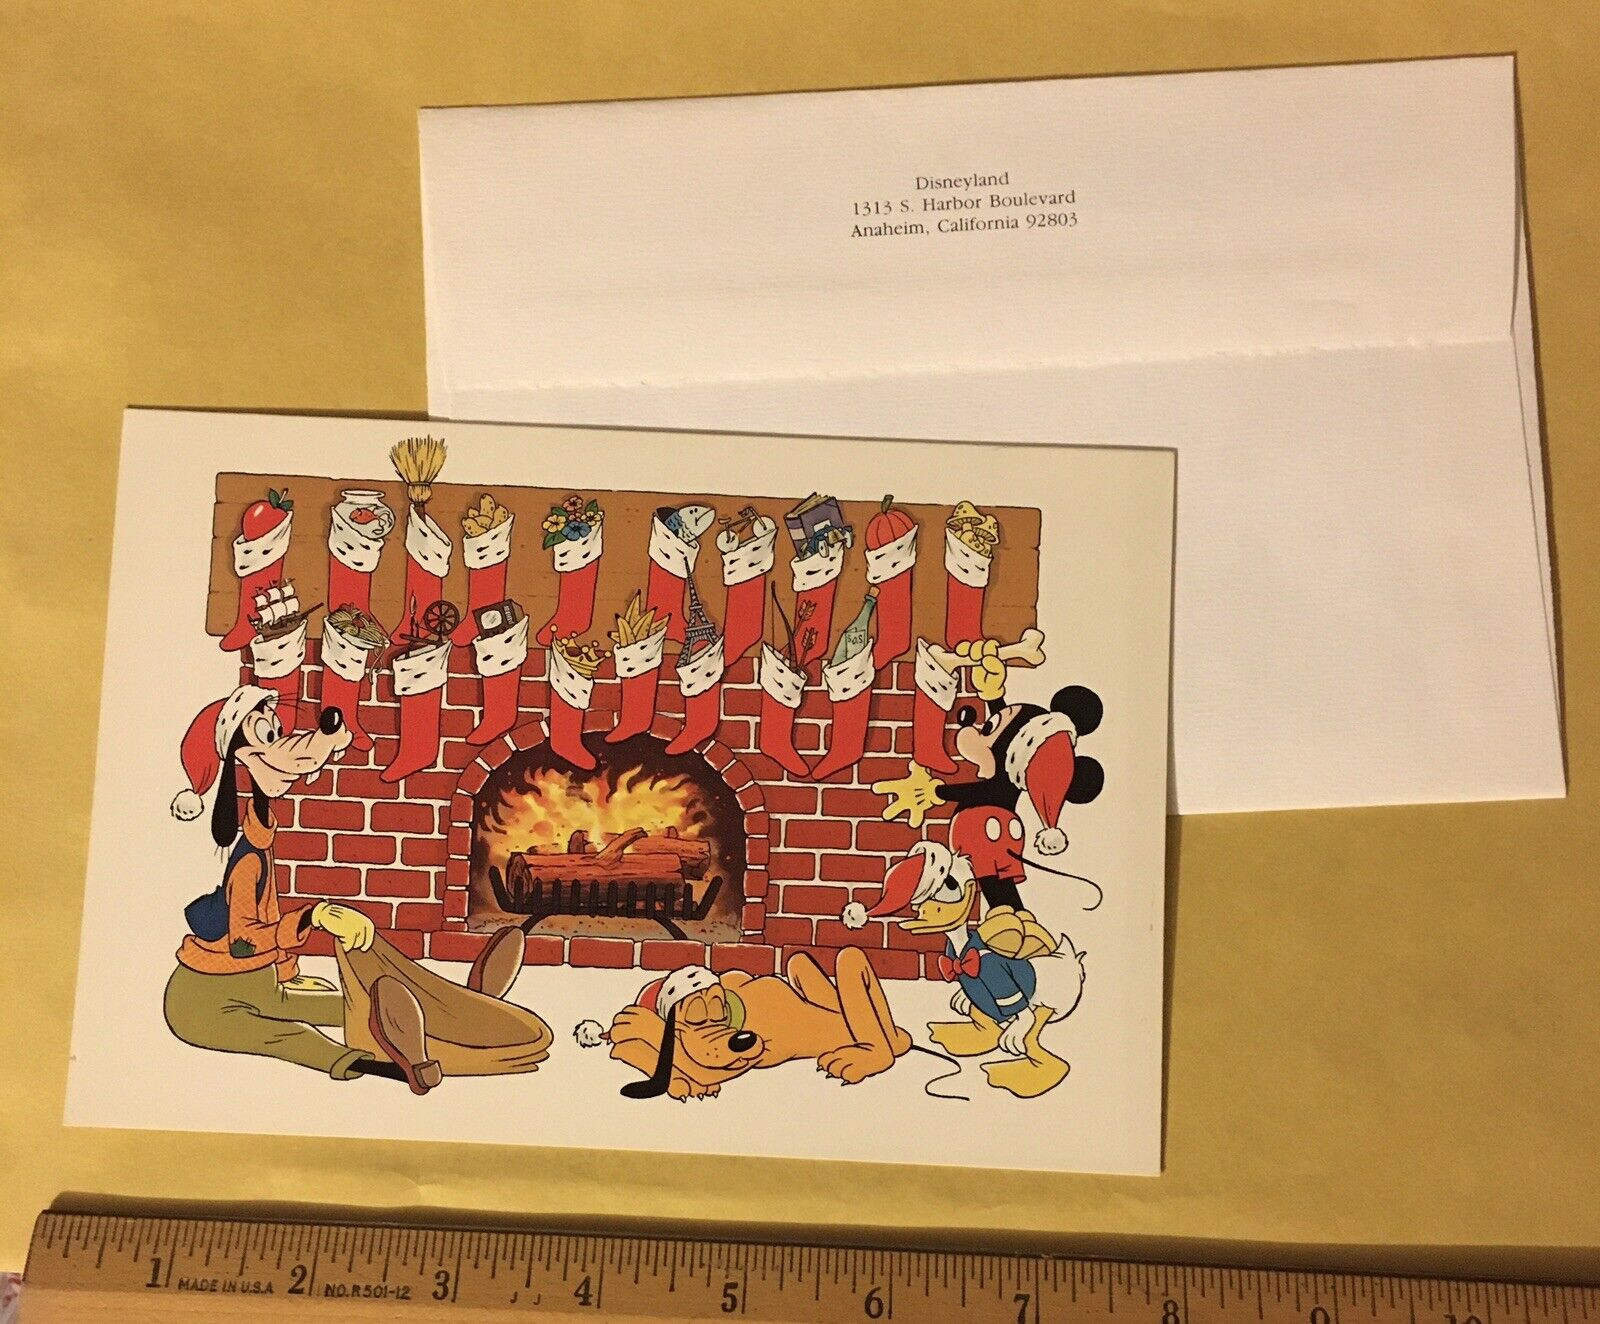 1981 Walt Disney Corporate Christmas Card - excellent/mint condition, rare